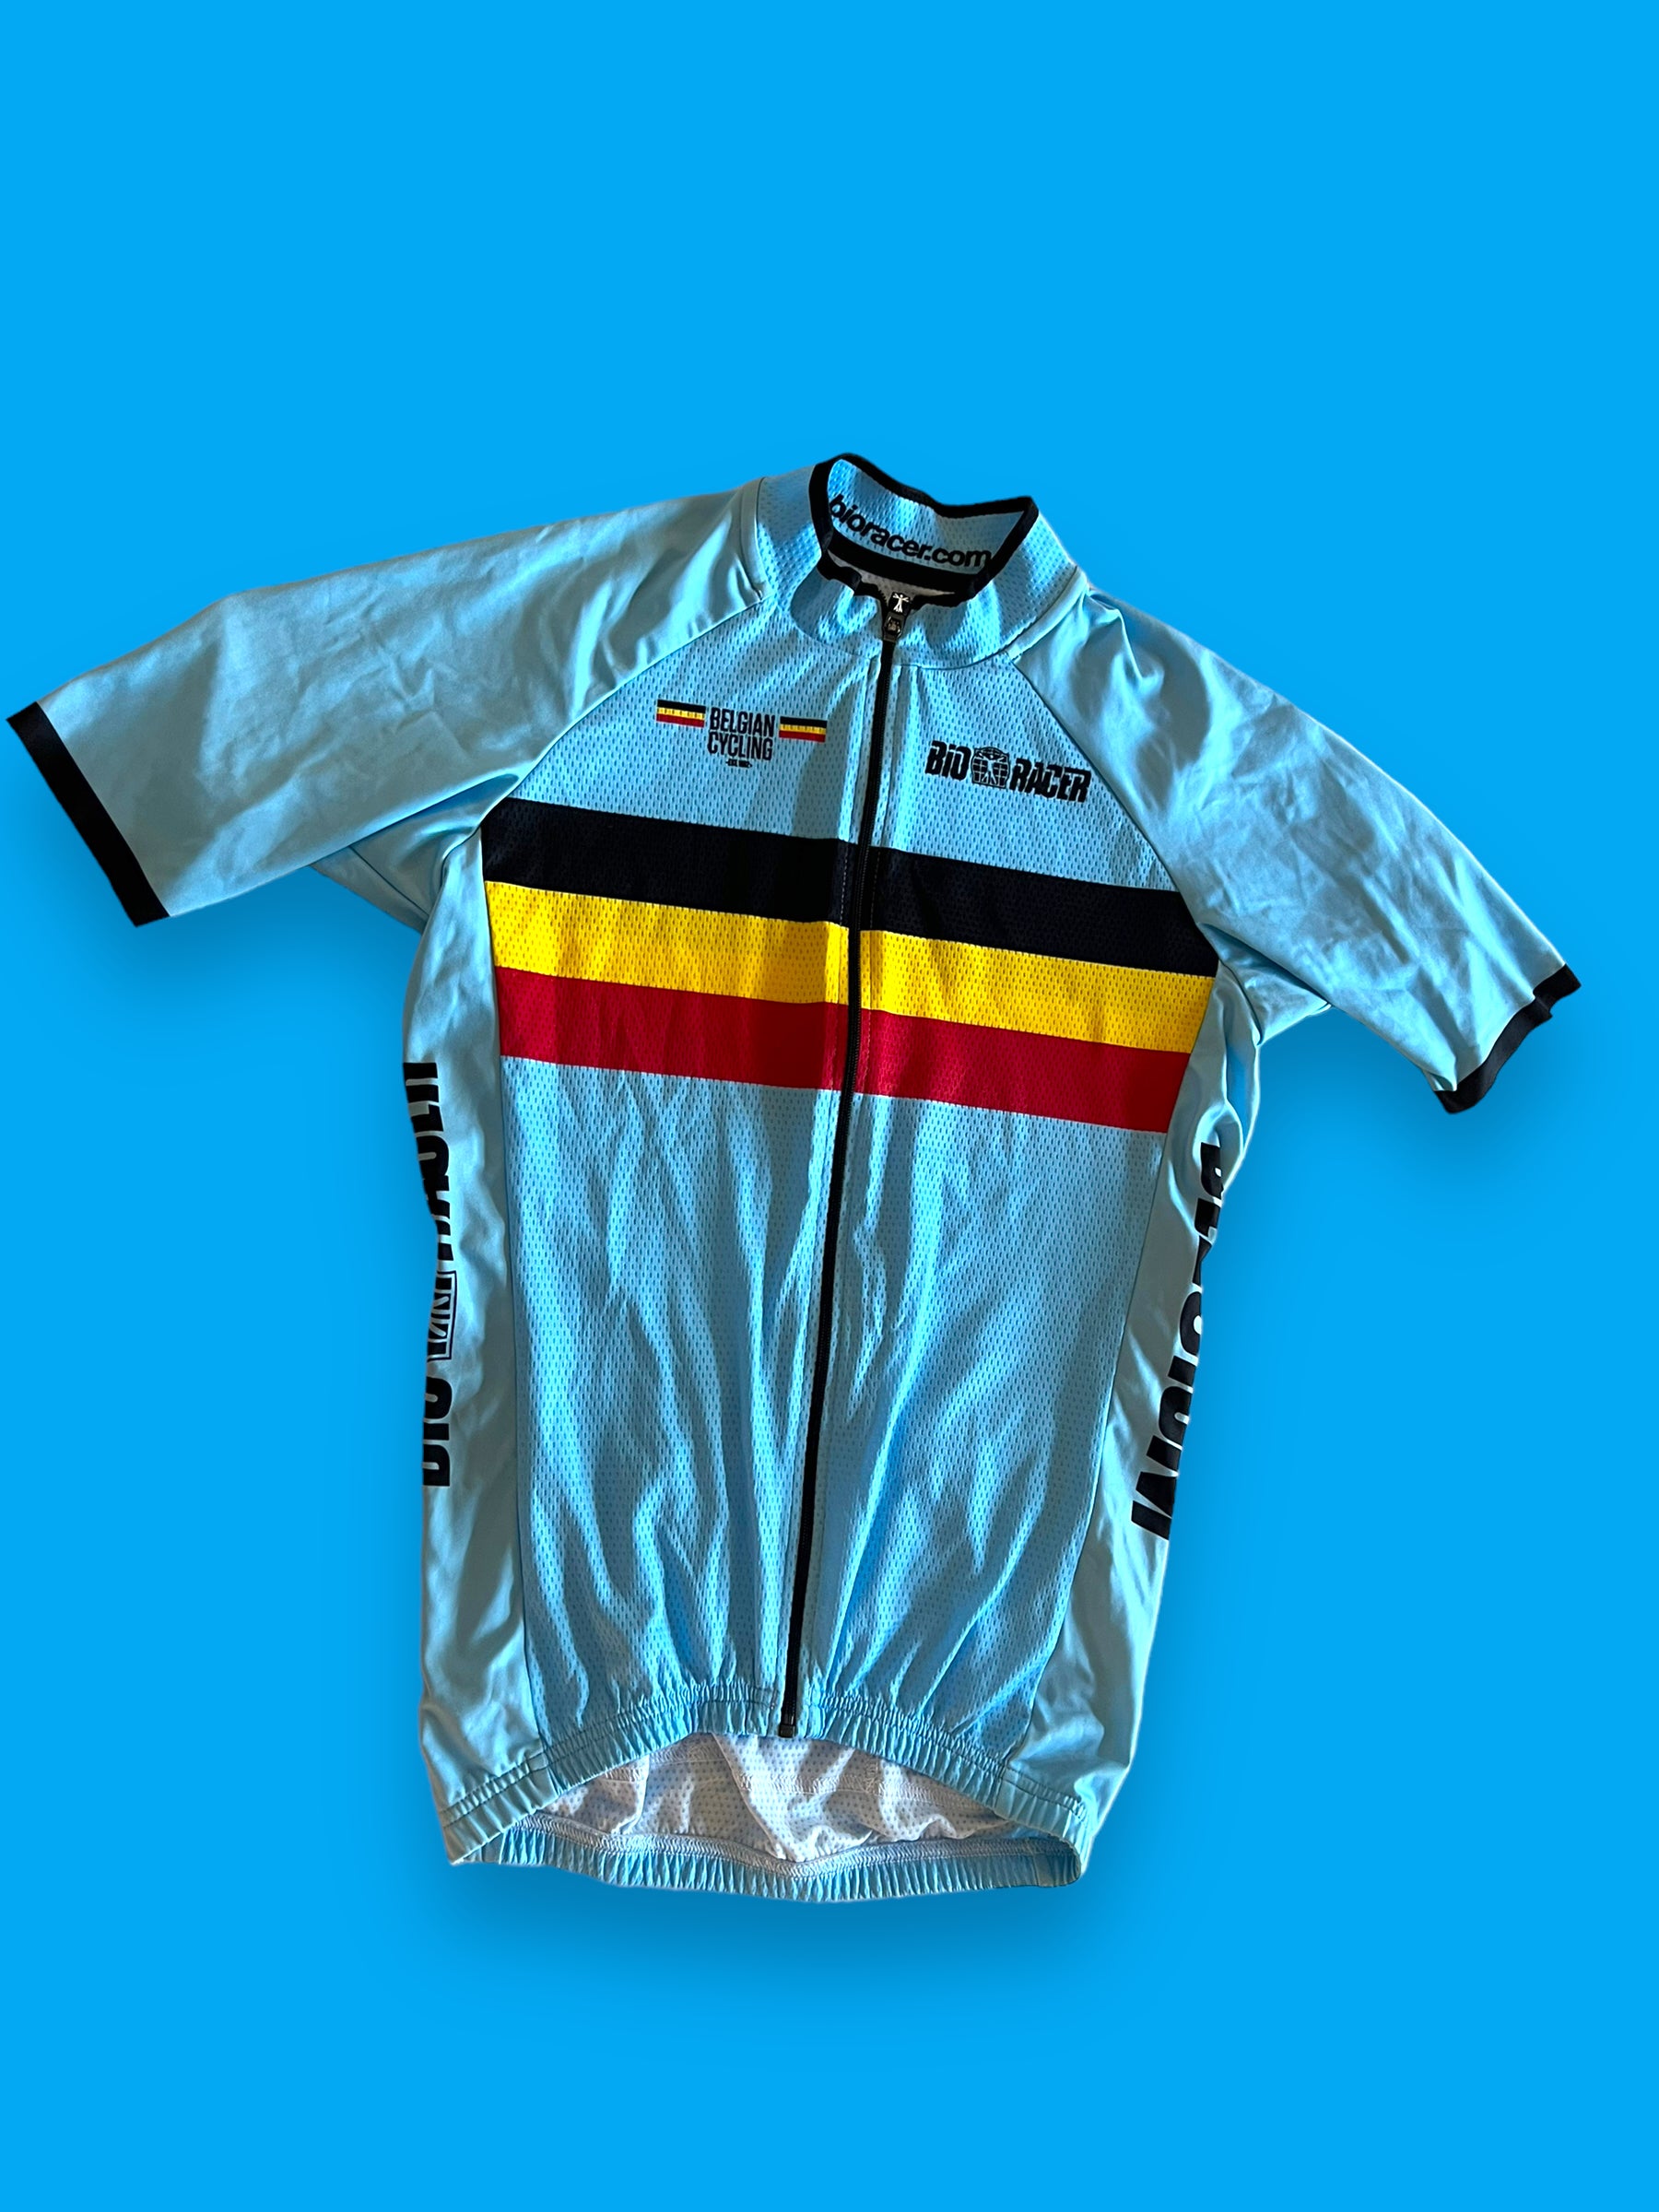 Short Sleeve Jersey | Bioracer | Belgian National Team | Pro Cycling Kit